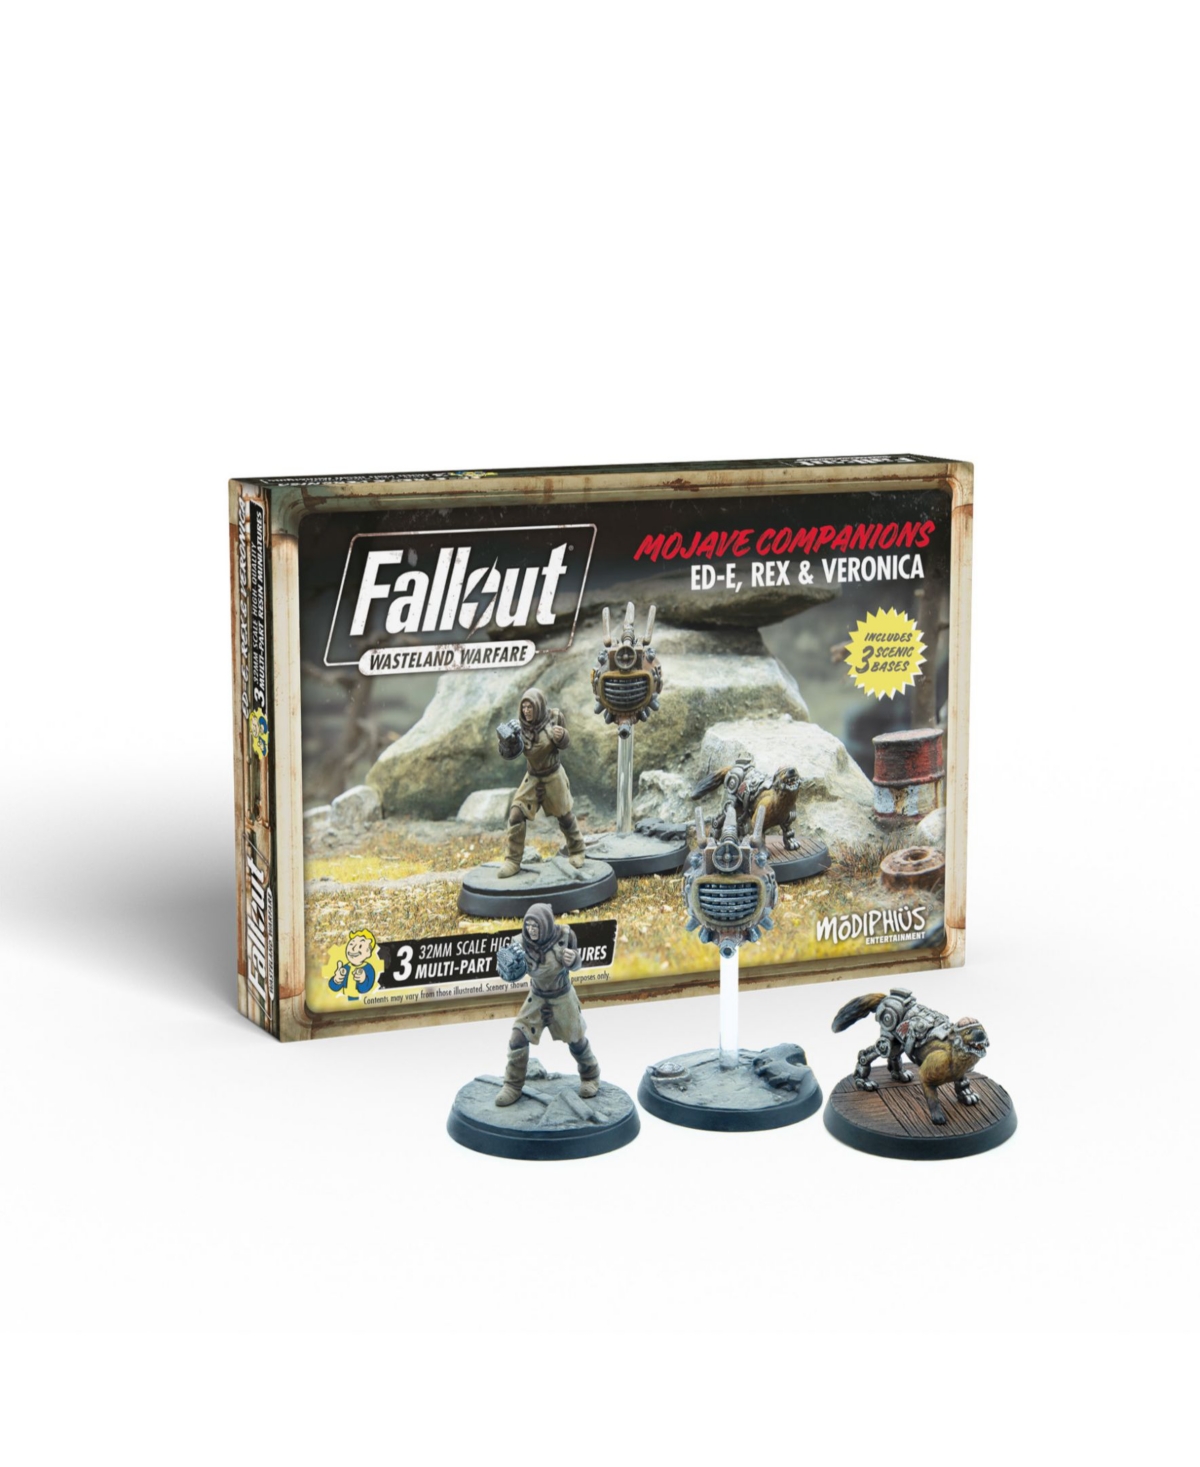 Modiphius Fallout – Wasteland Warfare Ed-e, Rex And Veronica In Multi